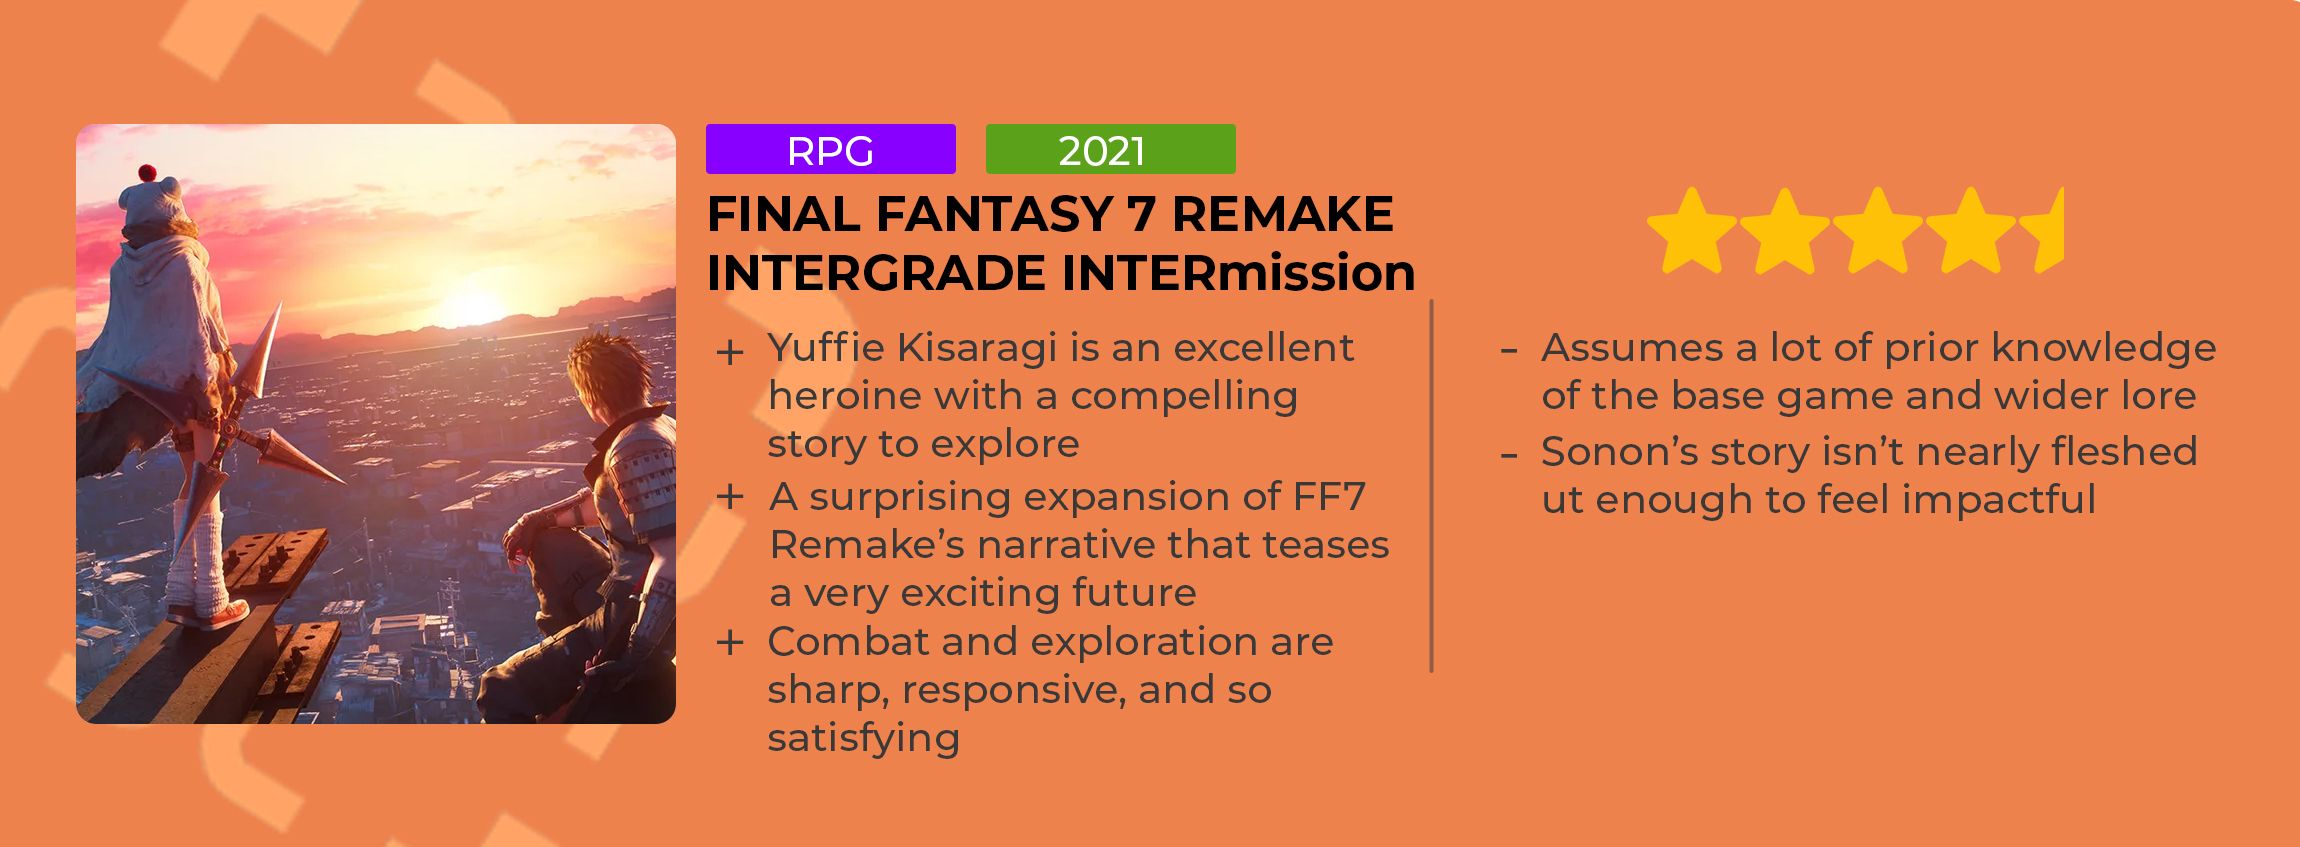 Final Fantasy 7 Remake Integrade Intermission Review Card